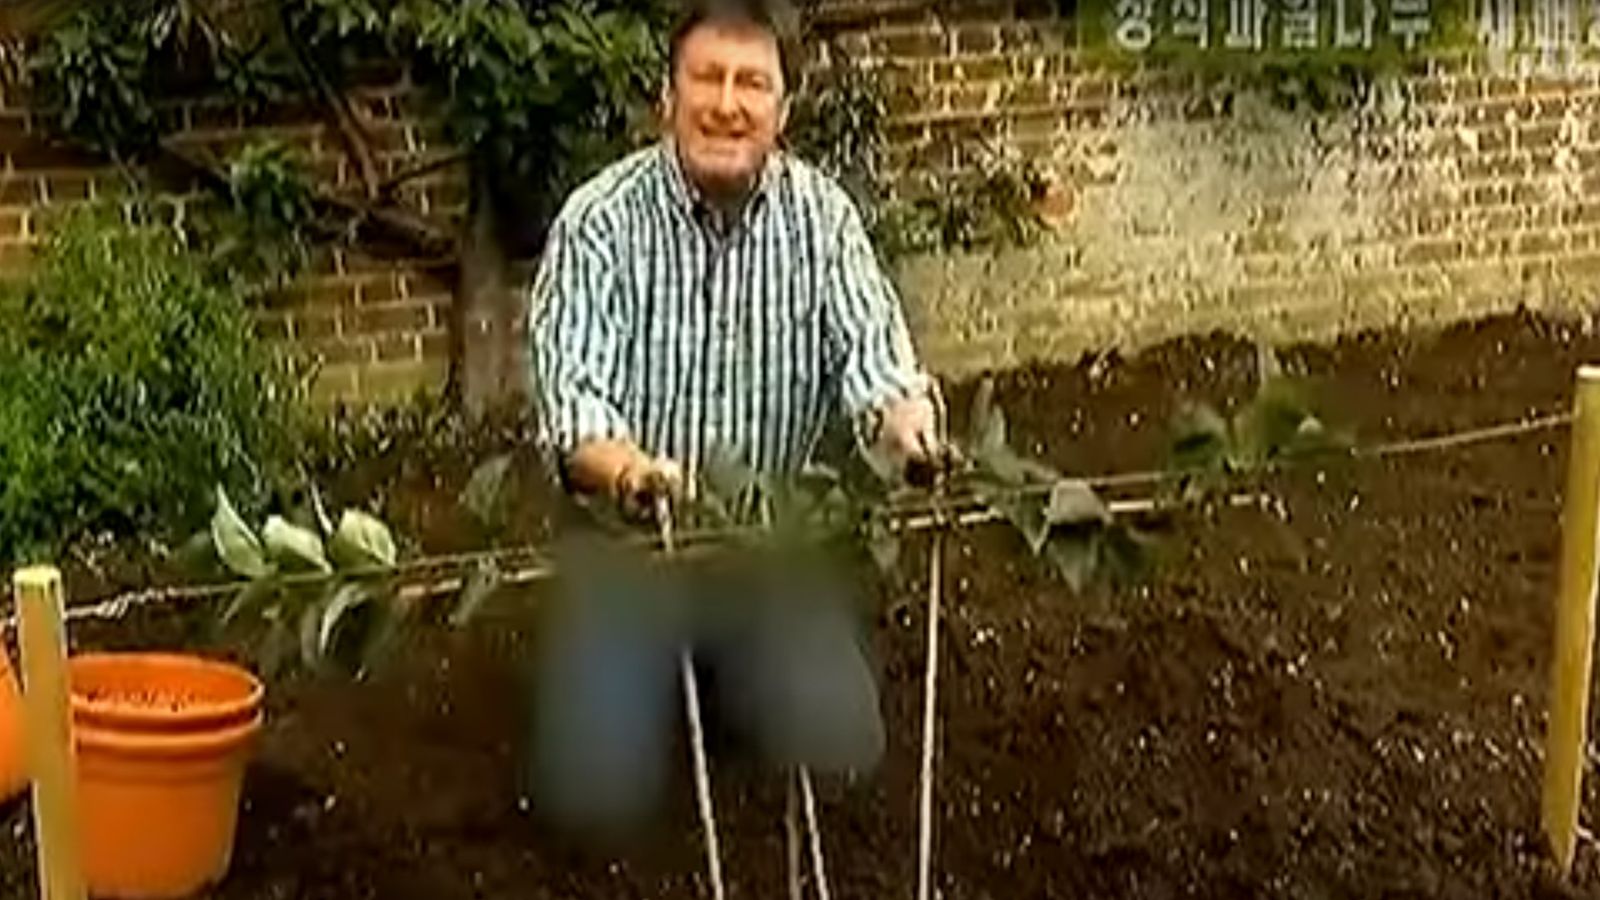 North Korea censors Alan Titchmarsh's trousers on BBC gardening show